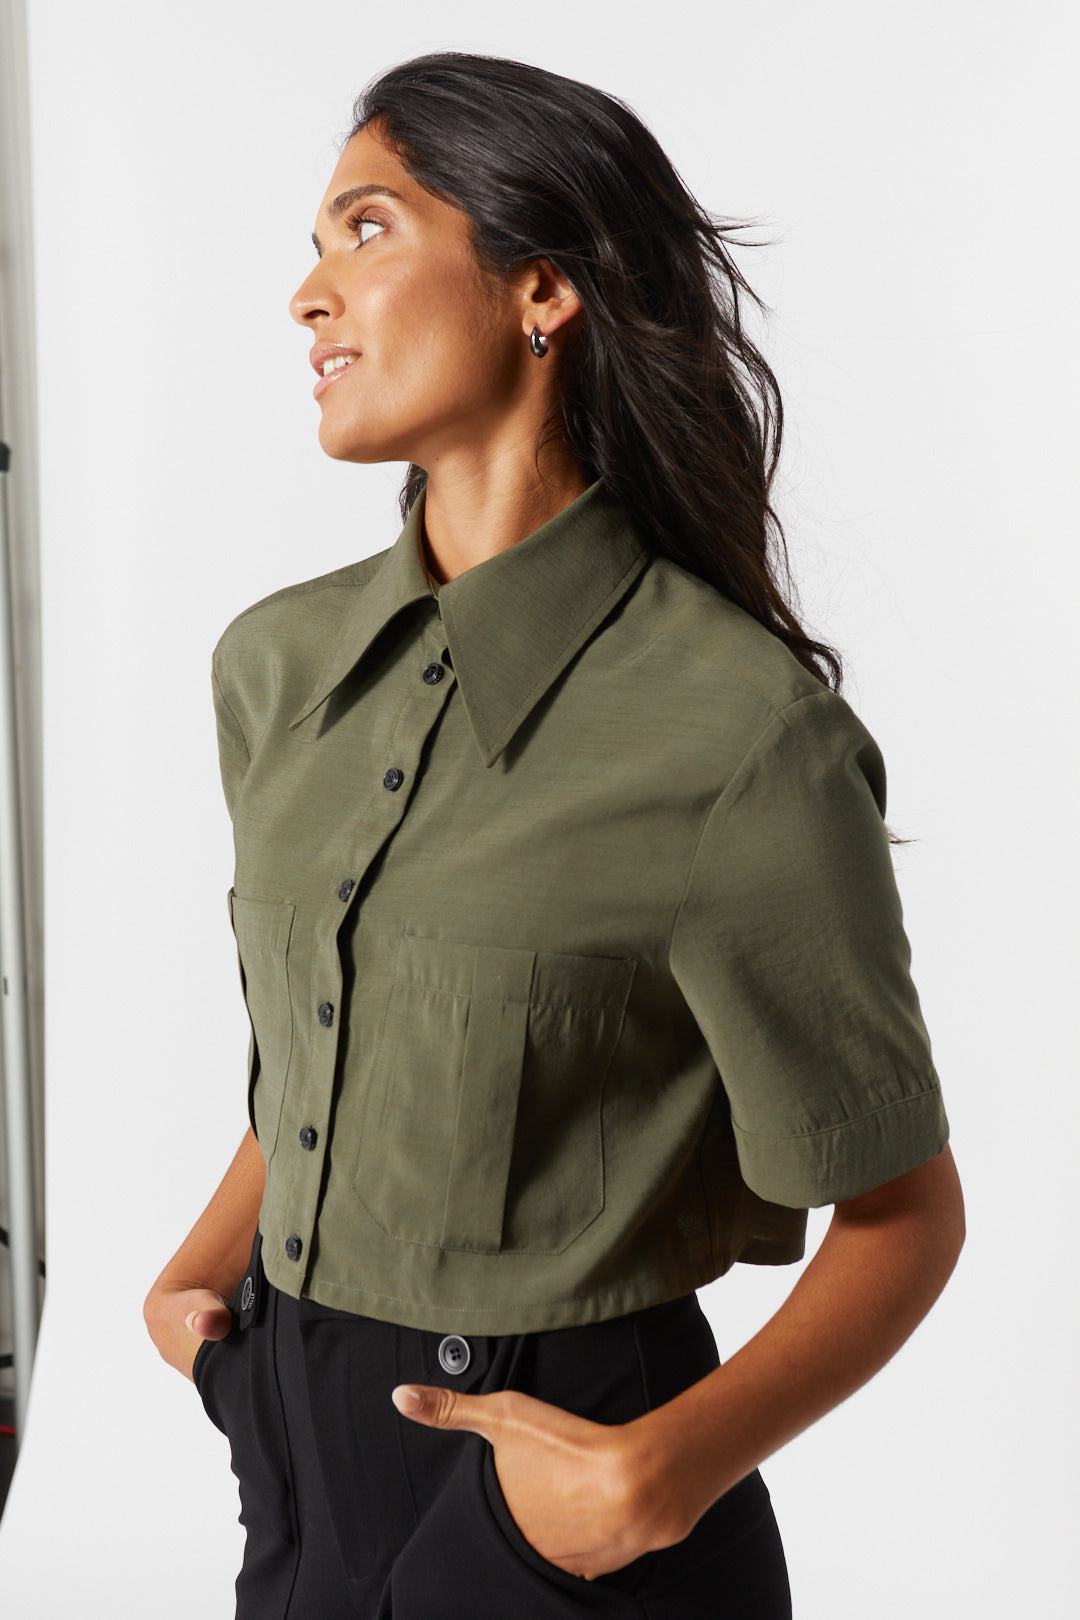 Short-sleeved khaki green shirt | Brittany